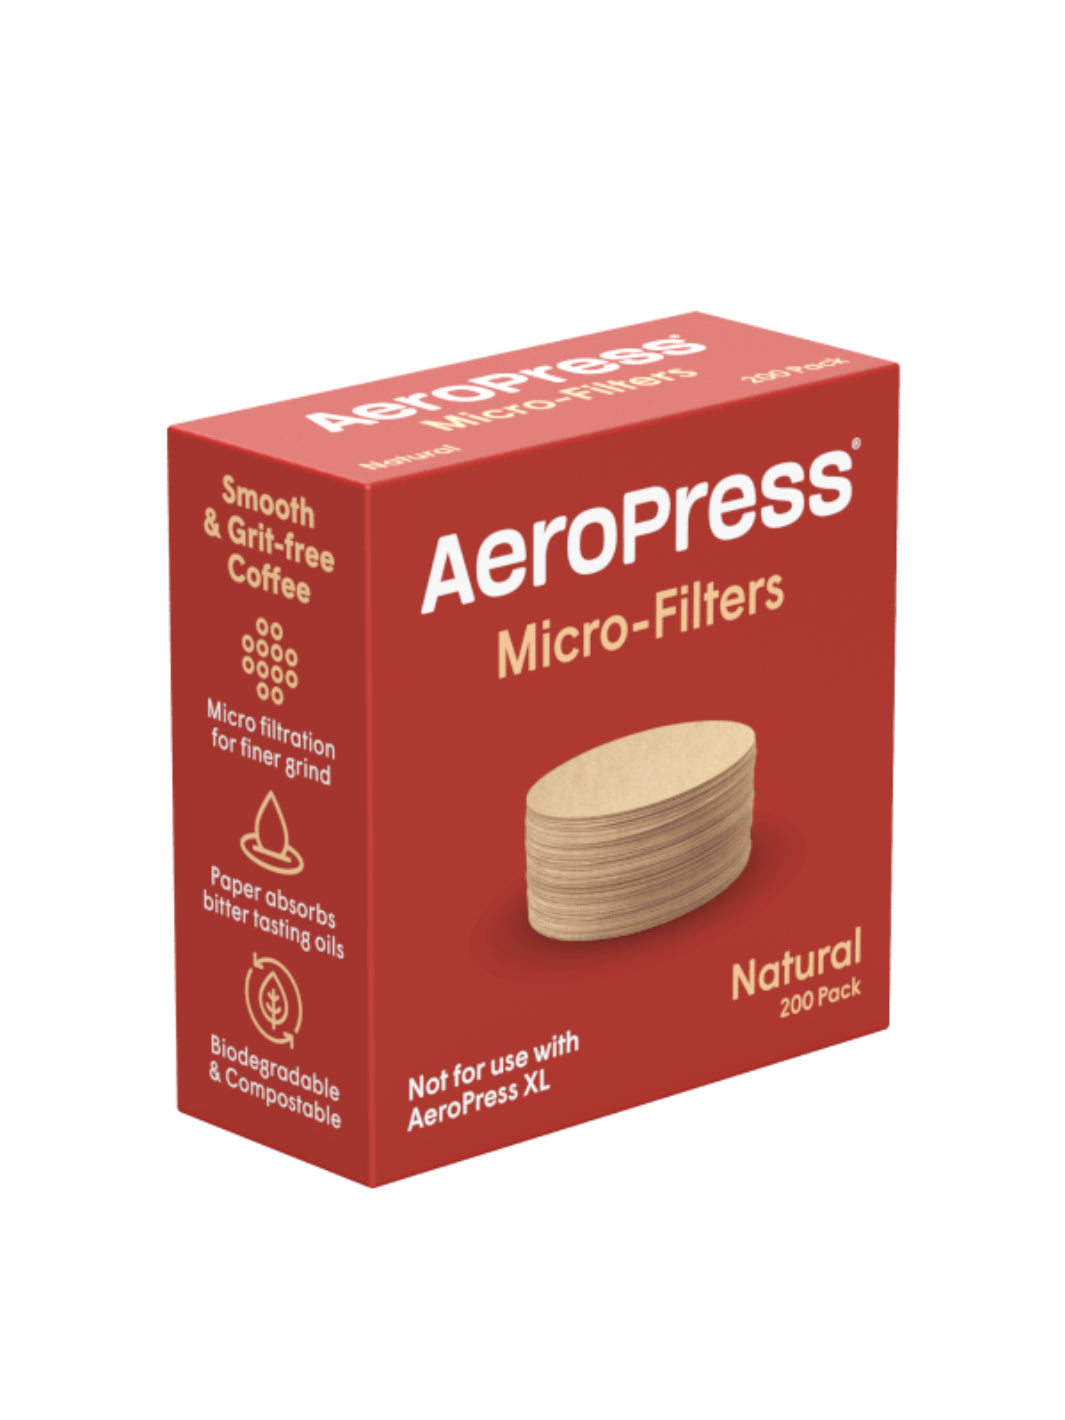 AeroPress Natural Microfilters (200-Pack)